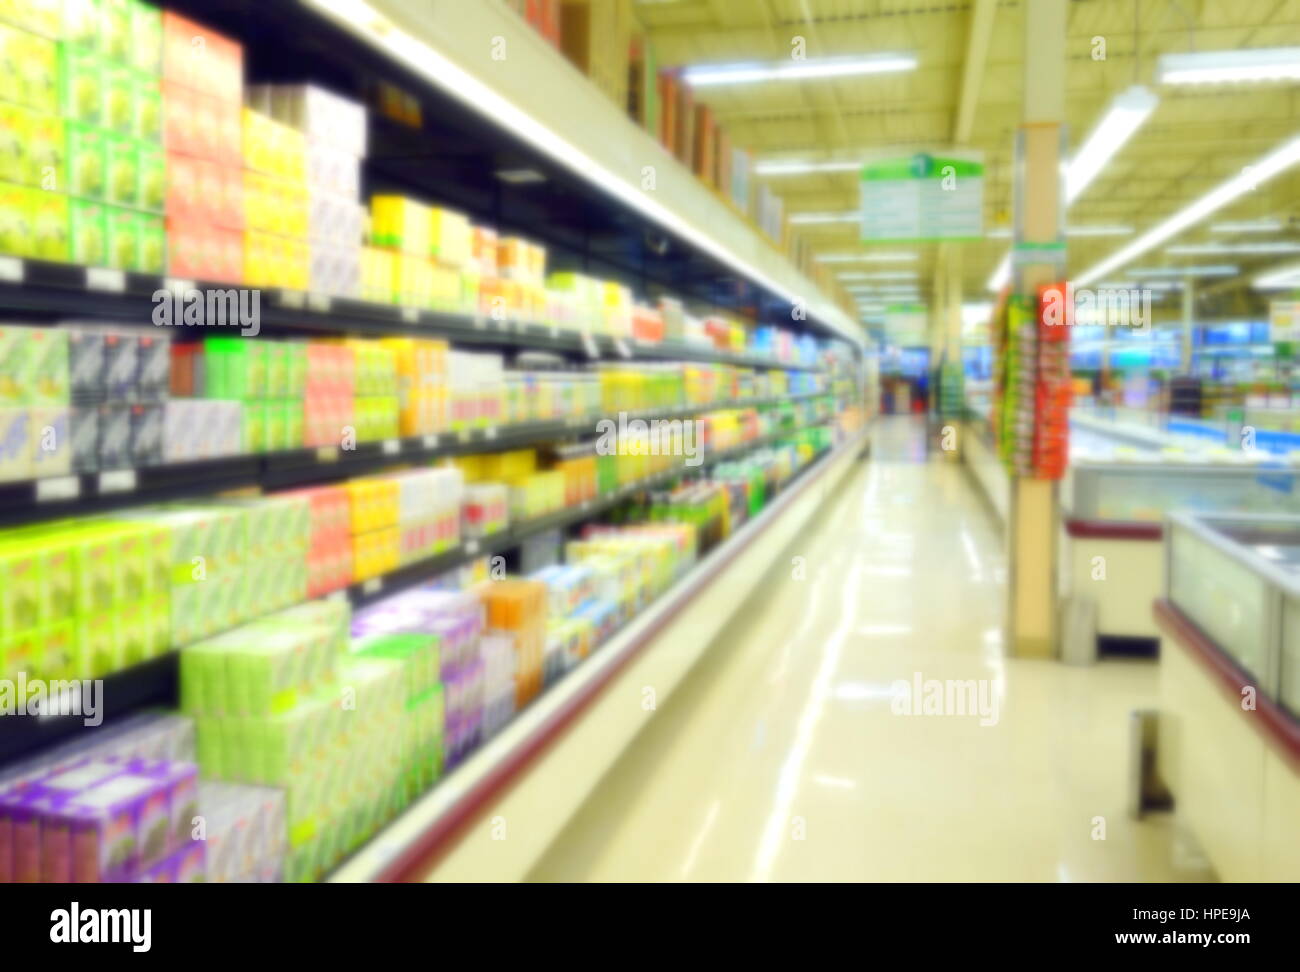 Blurred supermarket shelves Stock Photo